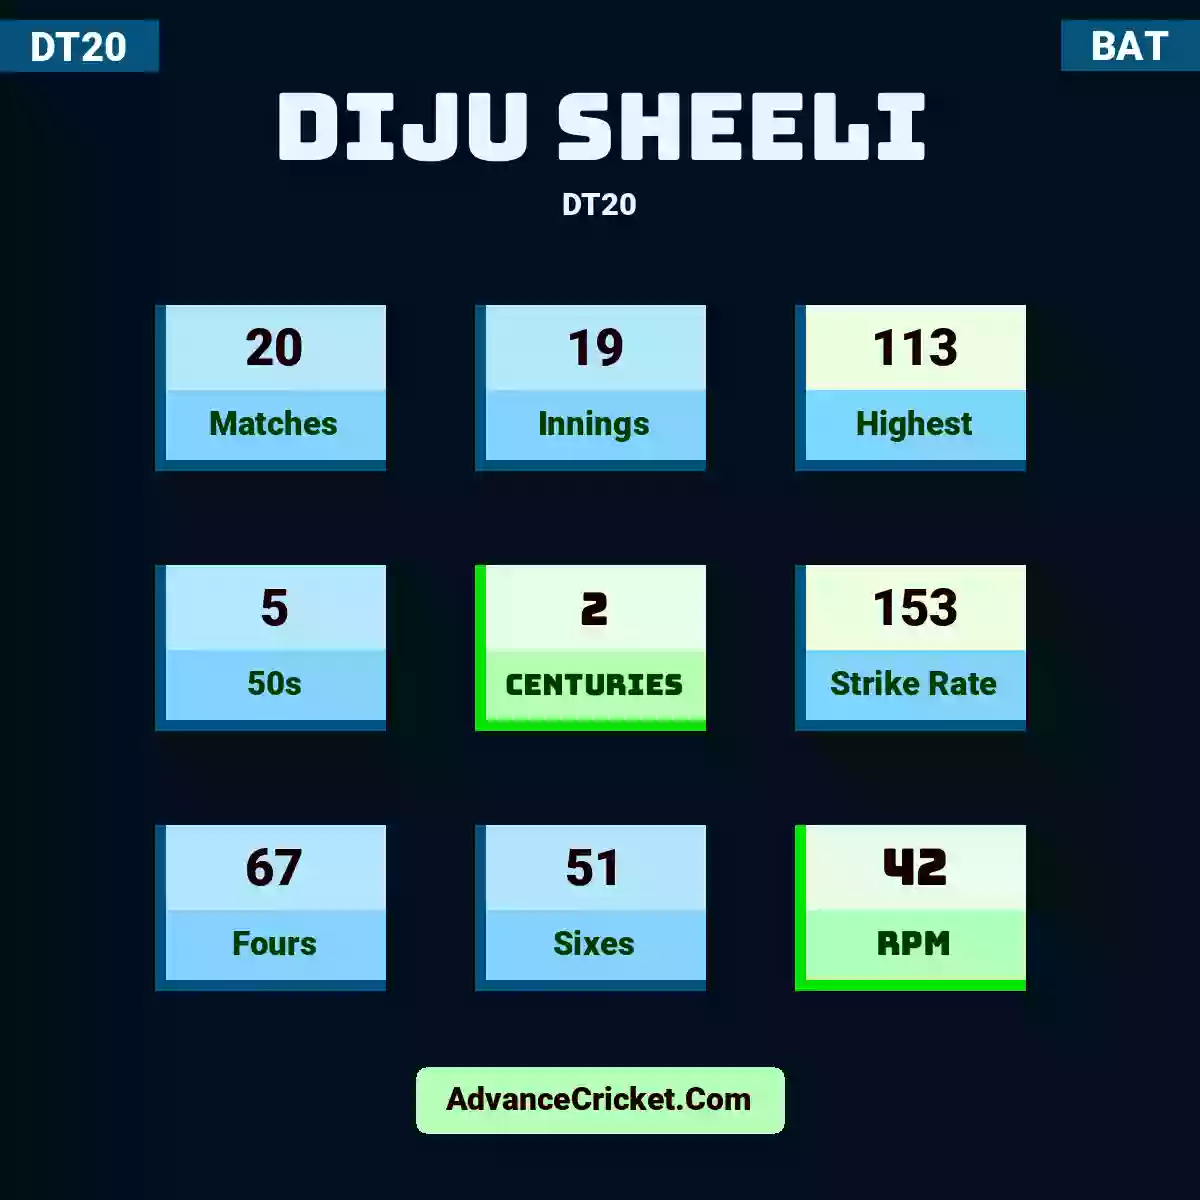 Diju Sheeli DT20 , Diju Sheeli played 20 matches, scored 113 runs as highest, 5 half-centuries, and 2 centuries, with a strike rate of 153. D.Sheeli hit 67 fours and 51 sixes, with an RPM of 42.